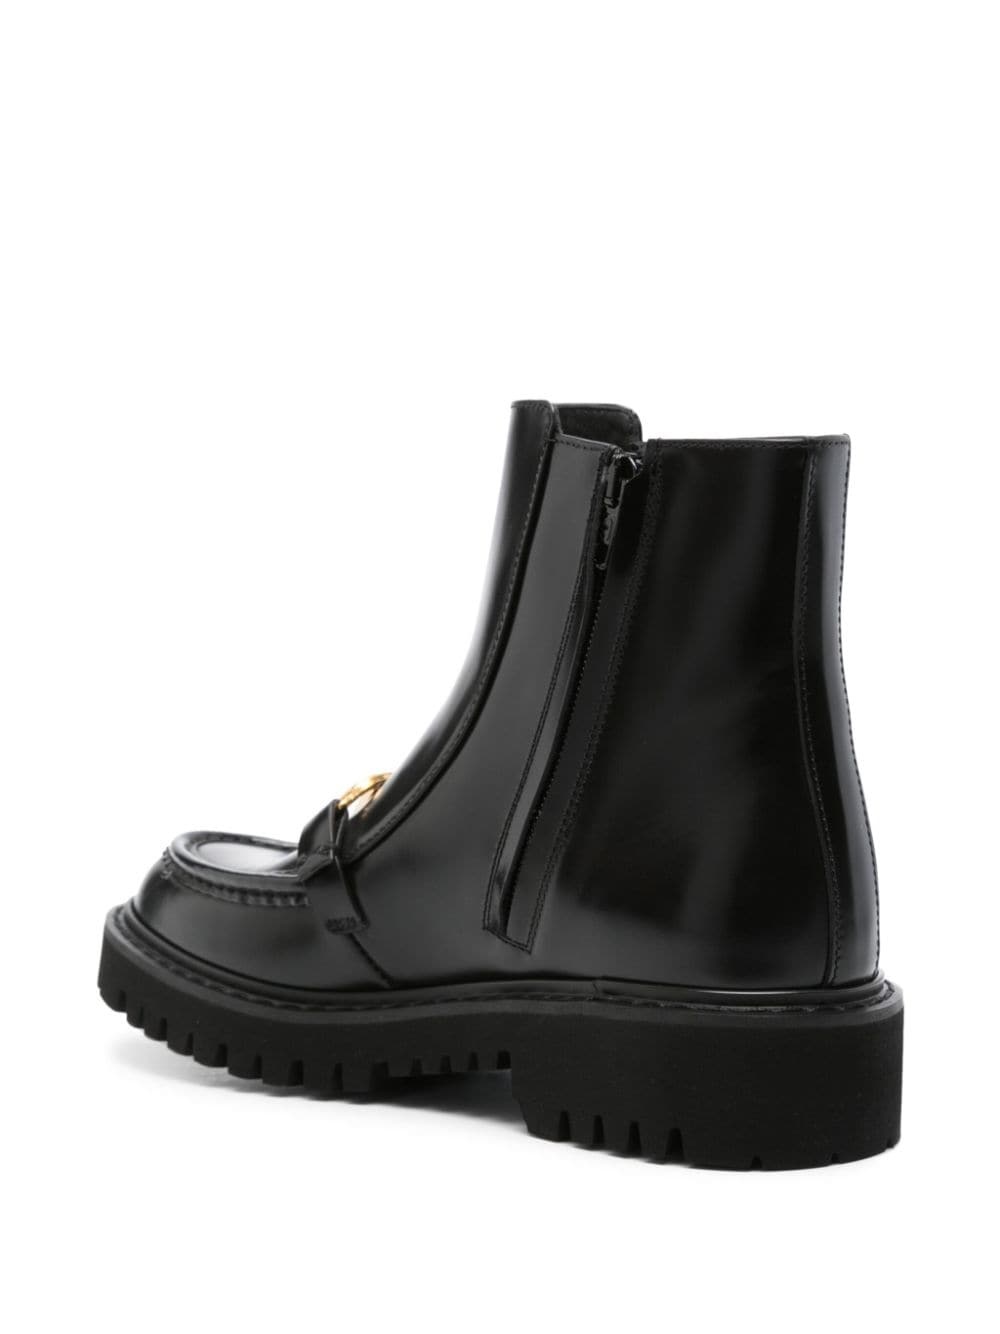 VLogo leather flat boots - 3